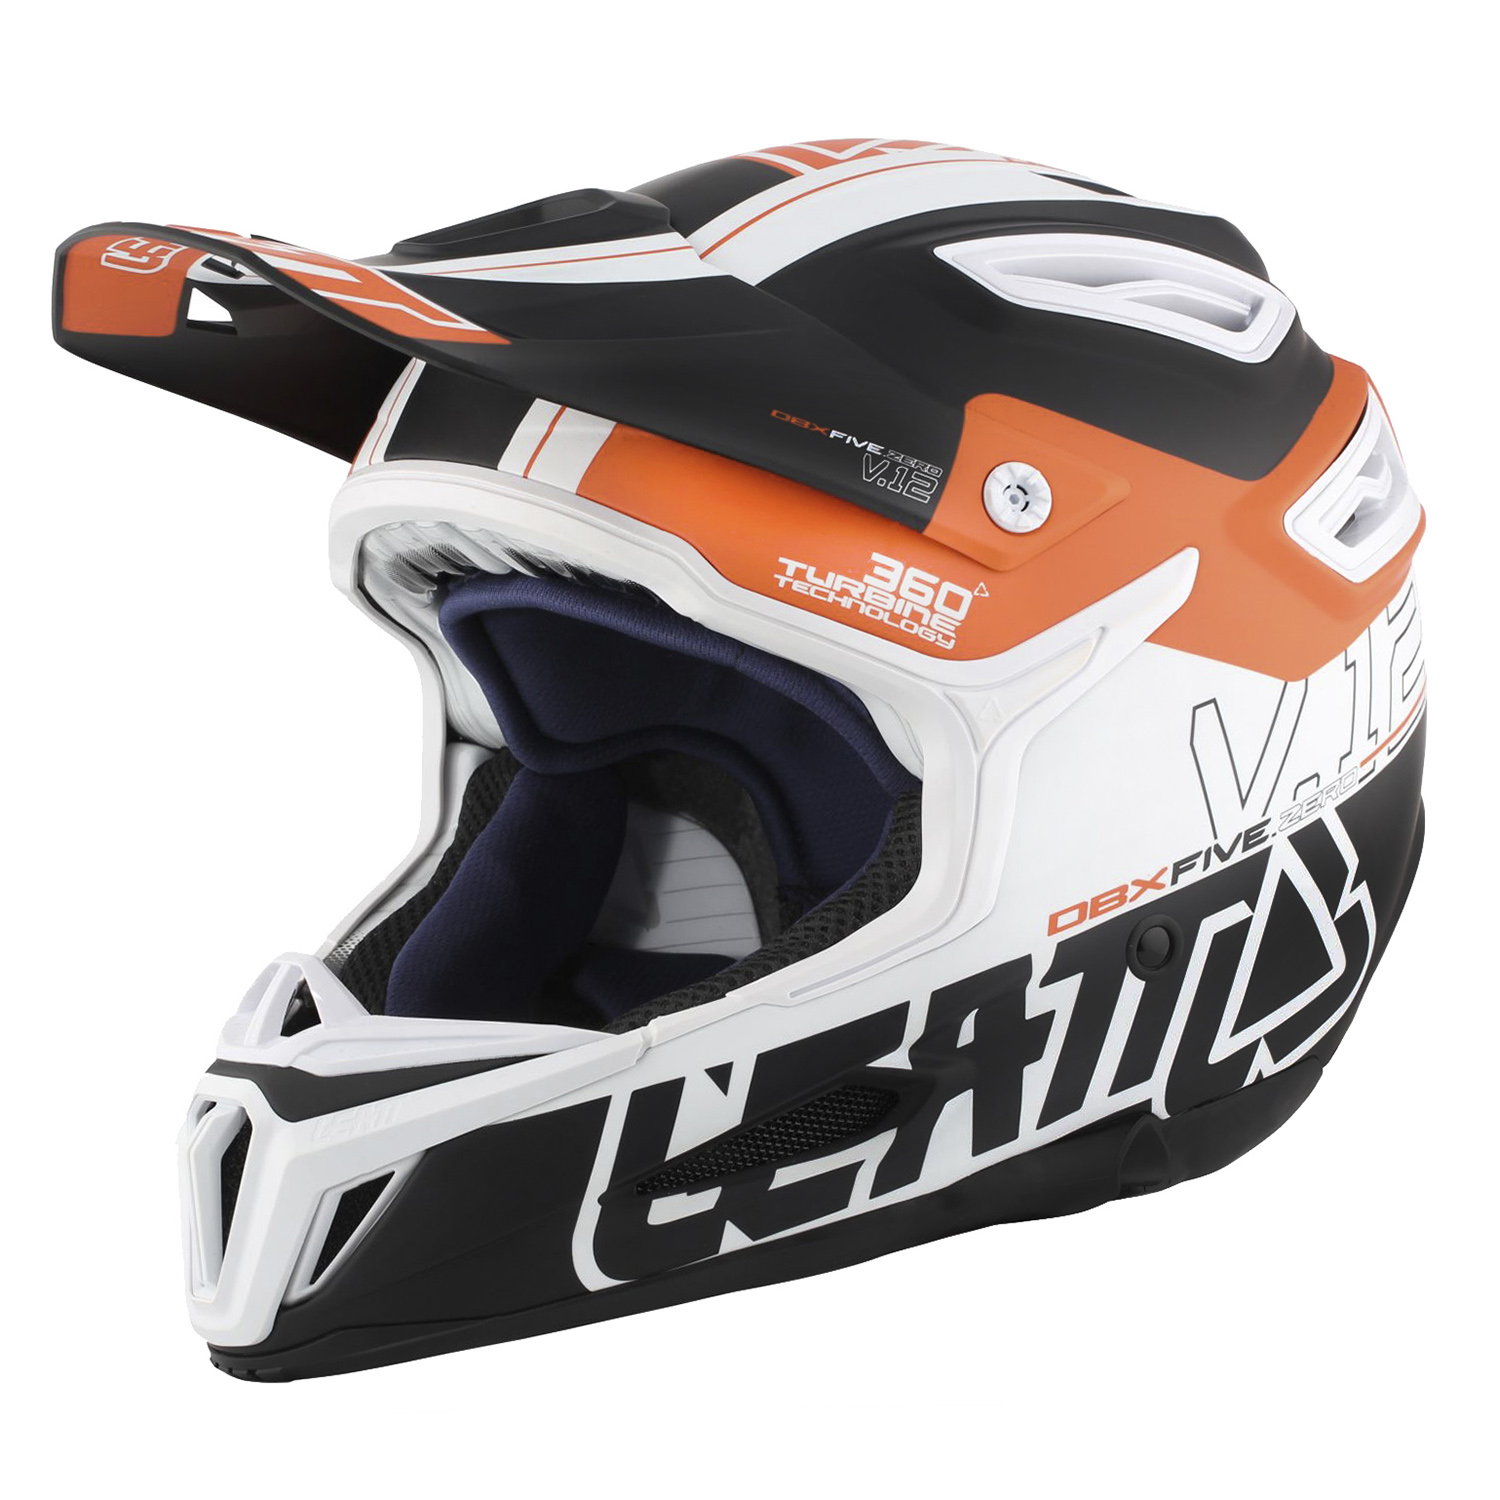 Leatt Downhill-MTB Helmet DBX 5.0 Composite Black/Orange/White